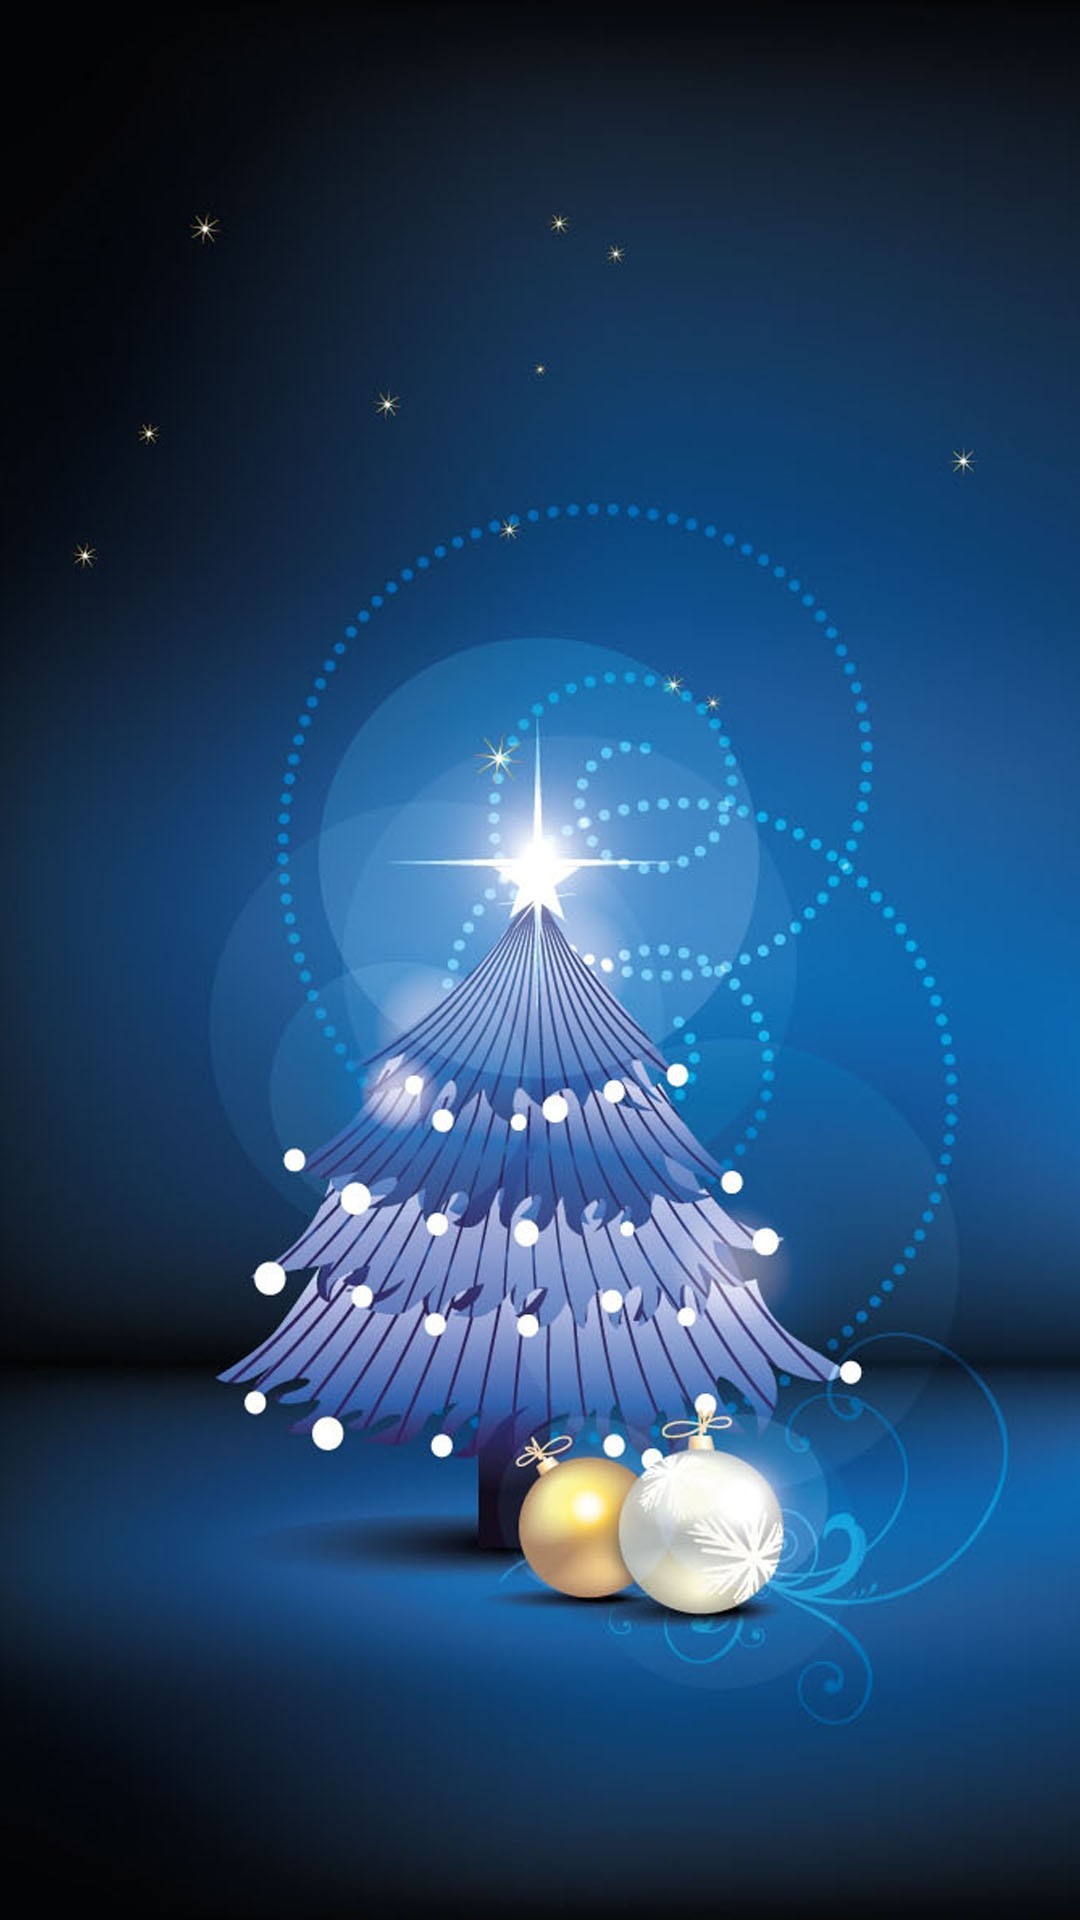 1080x1920 Night Christmas tree iPhone 6 plus wallpaper - stars